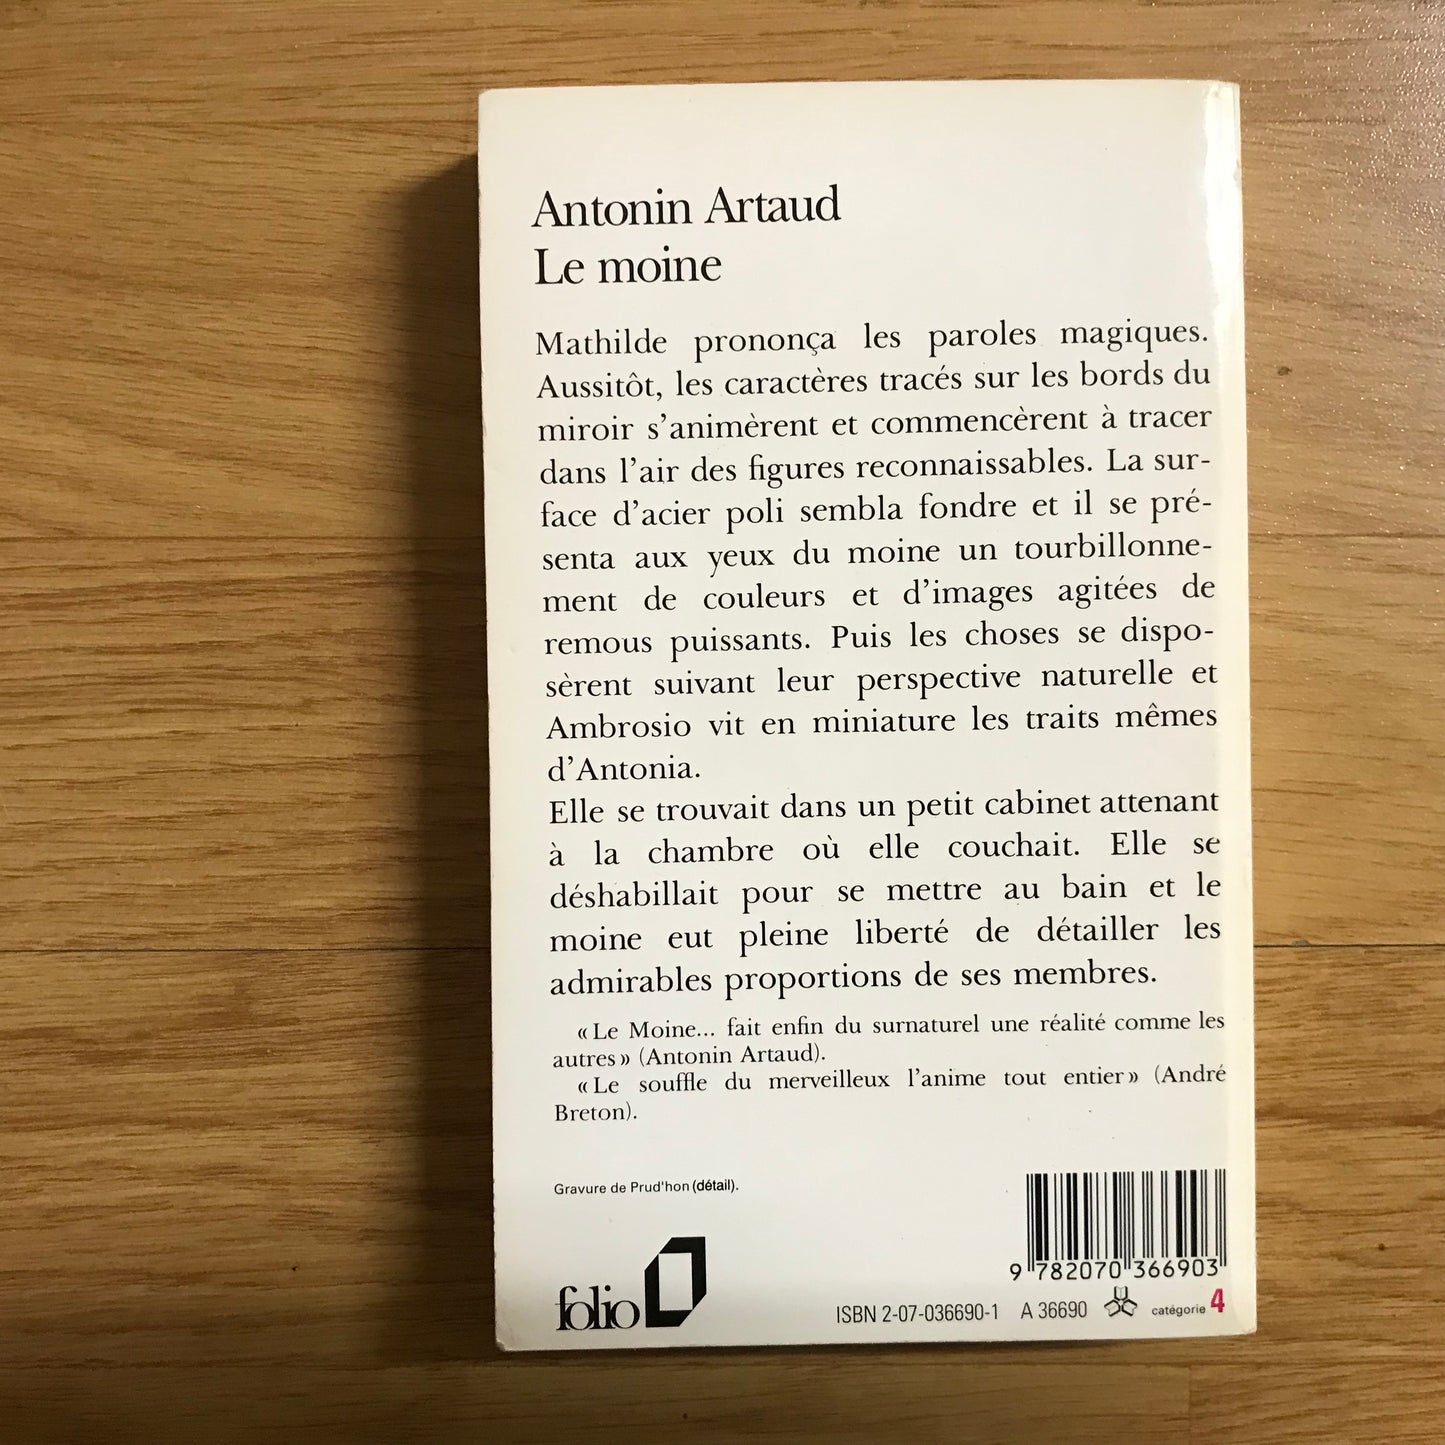 Artaud, Antonin - Le moine (de Lewis)